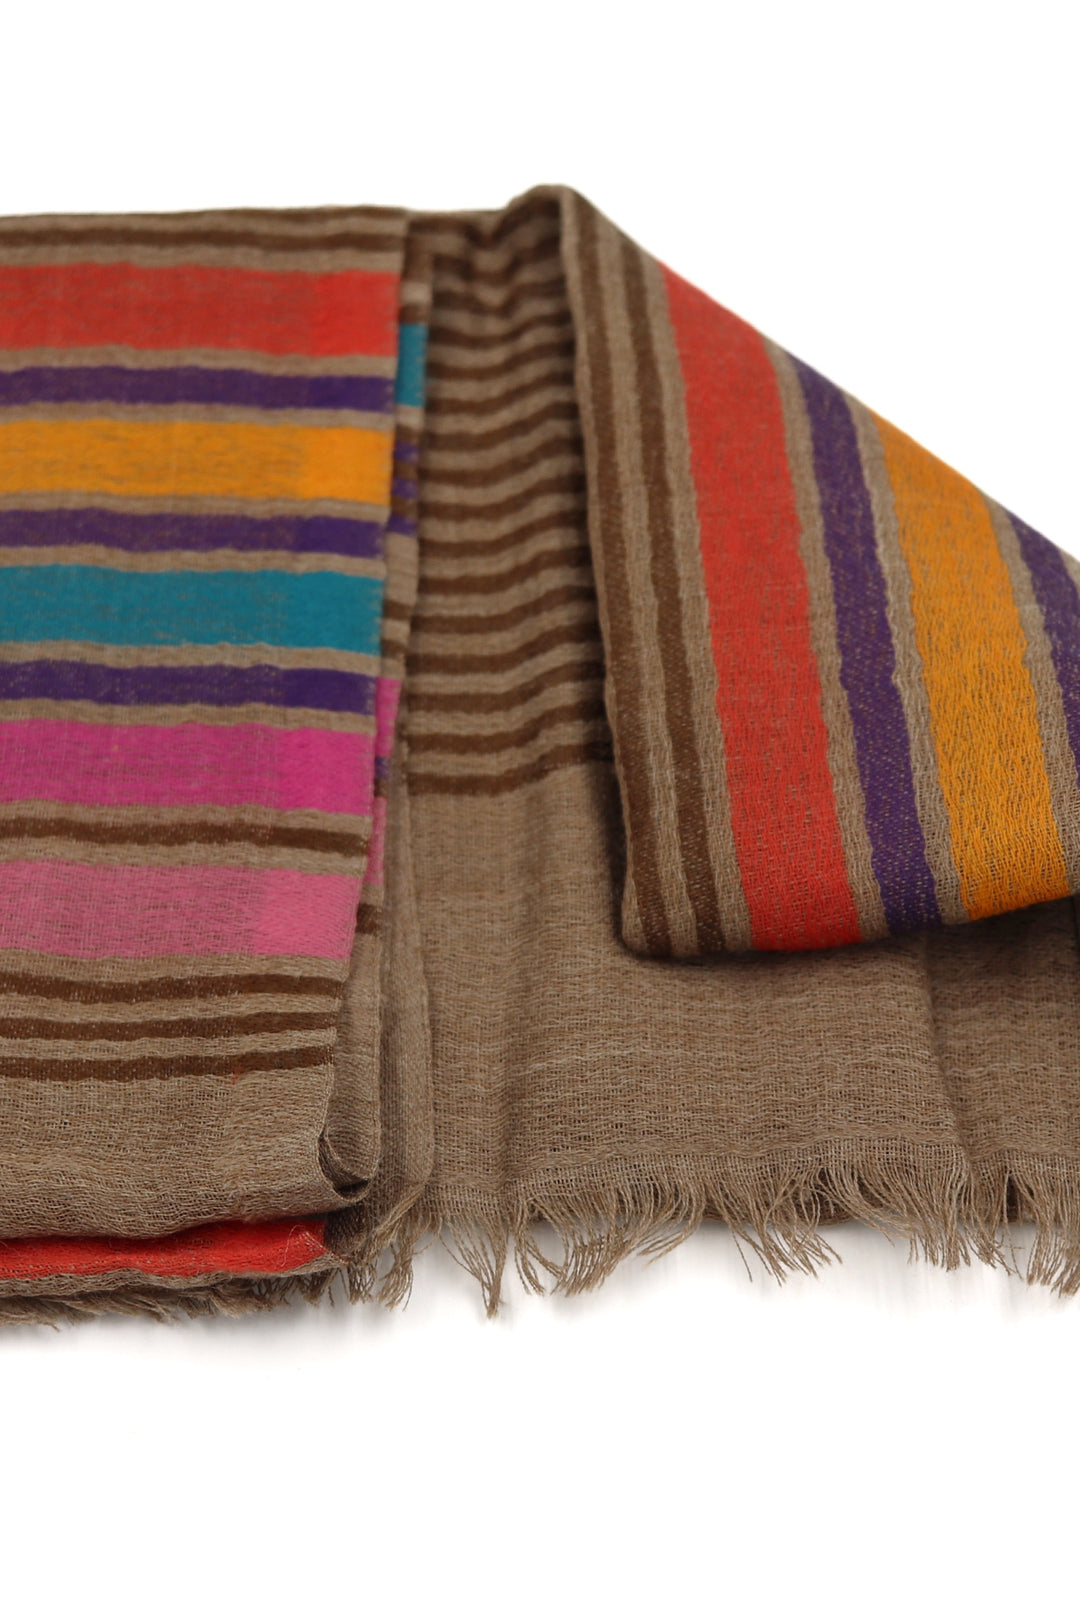 Mulethi fine wool woven shawl